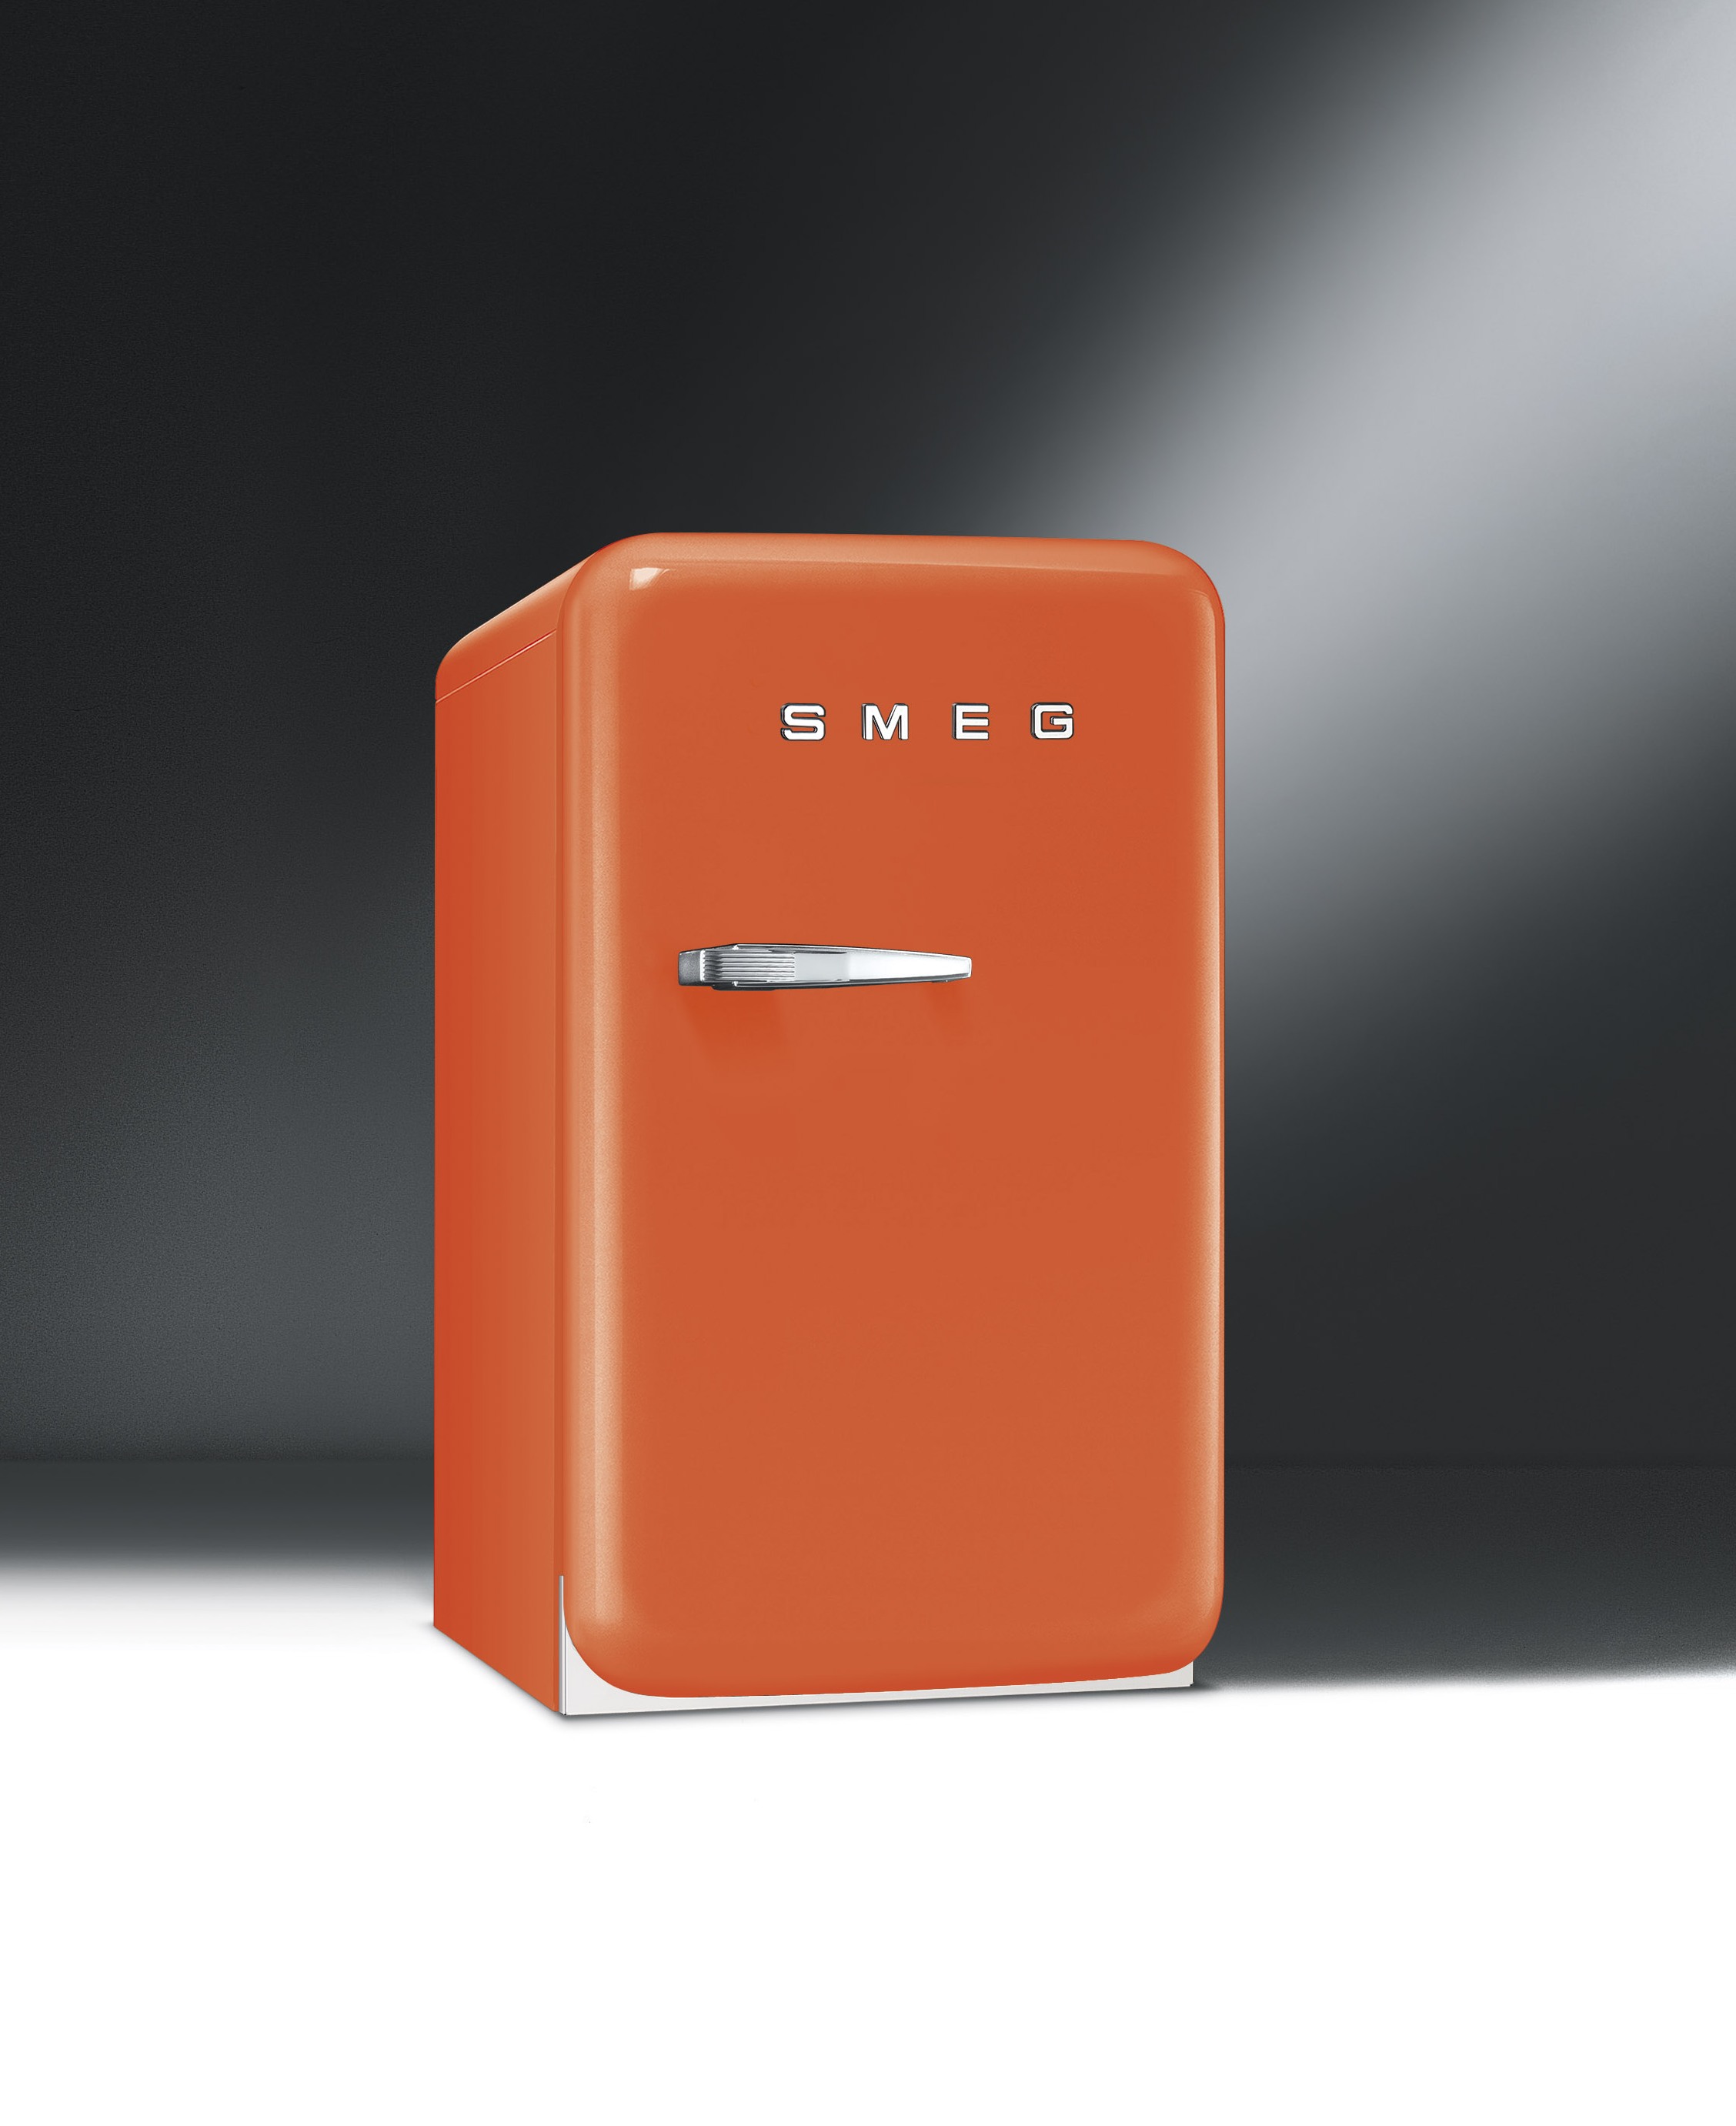 FAB5 mini koelkast van Smeg #koelkast #keuken